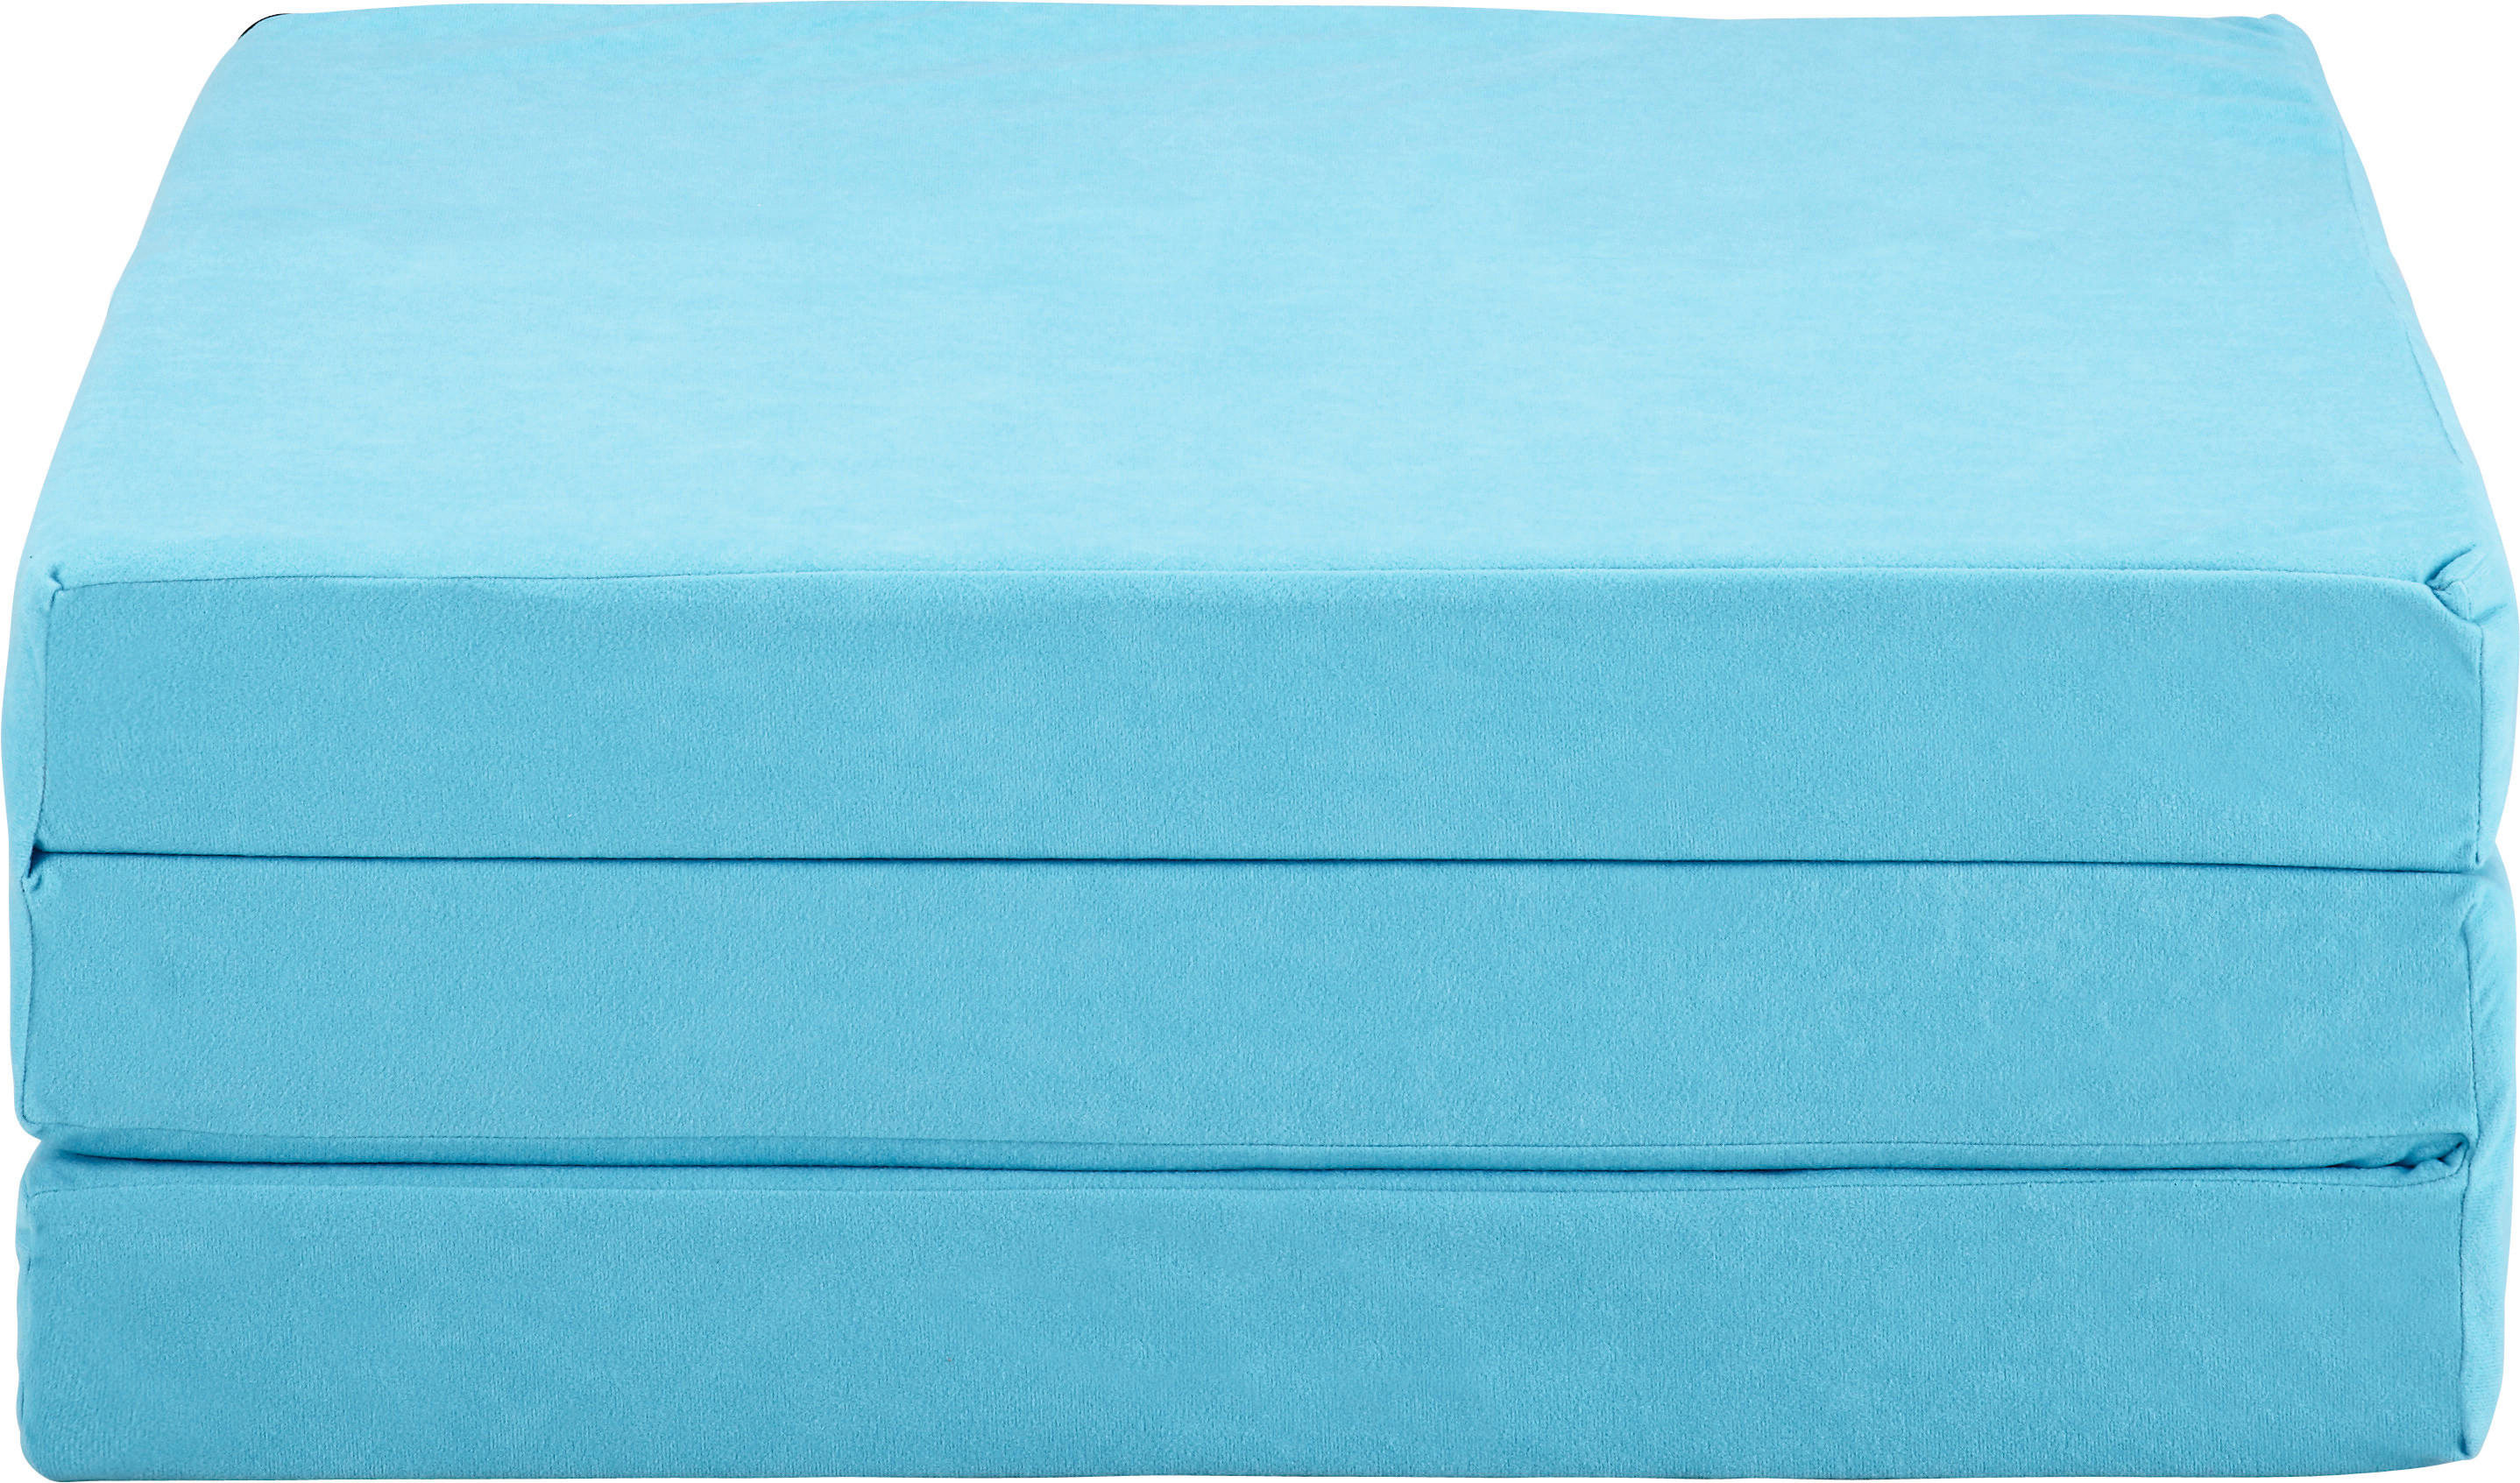 KLAPPMATRATZE Höhe ca. 8 cm  - Hellblau, KONVENTIONELL, Textil (189/65/8cm) - P & B